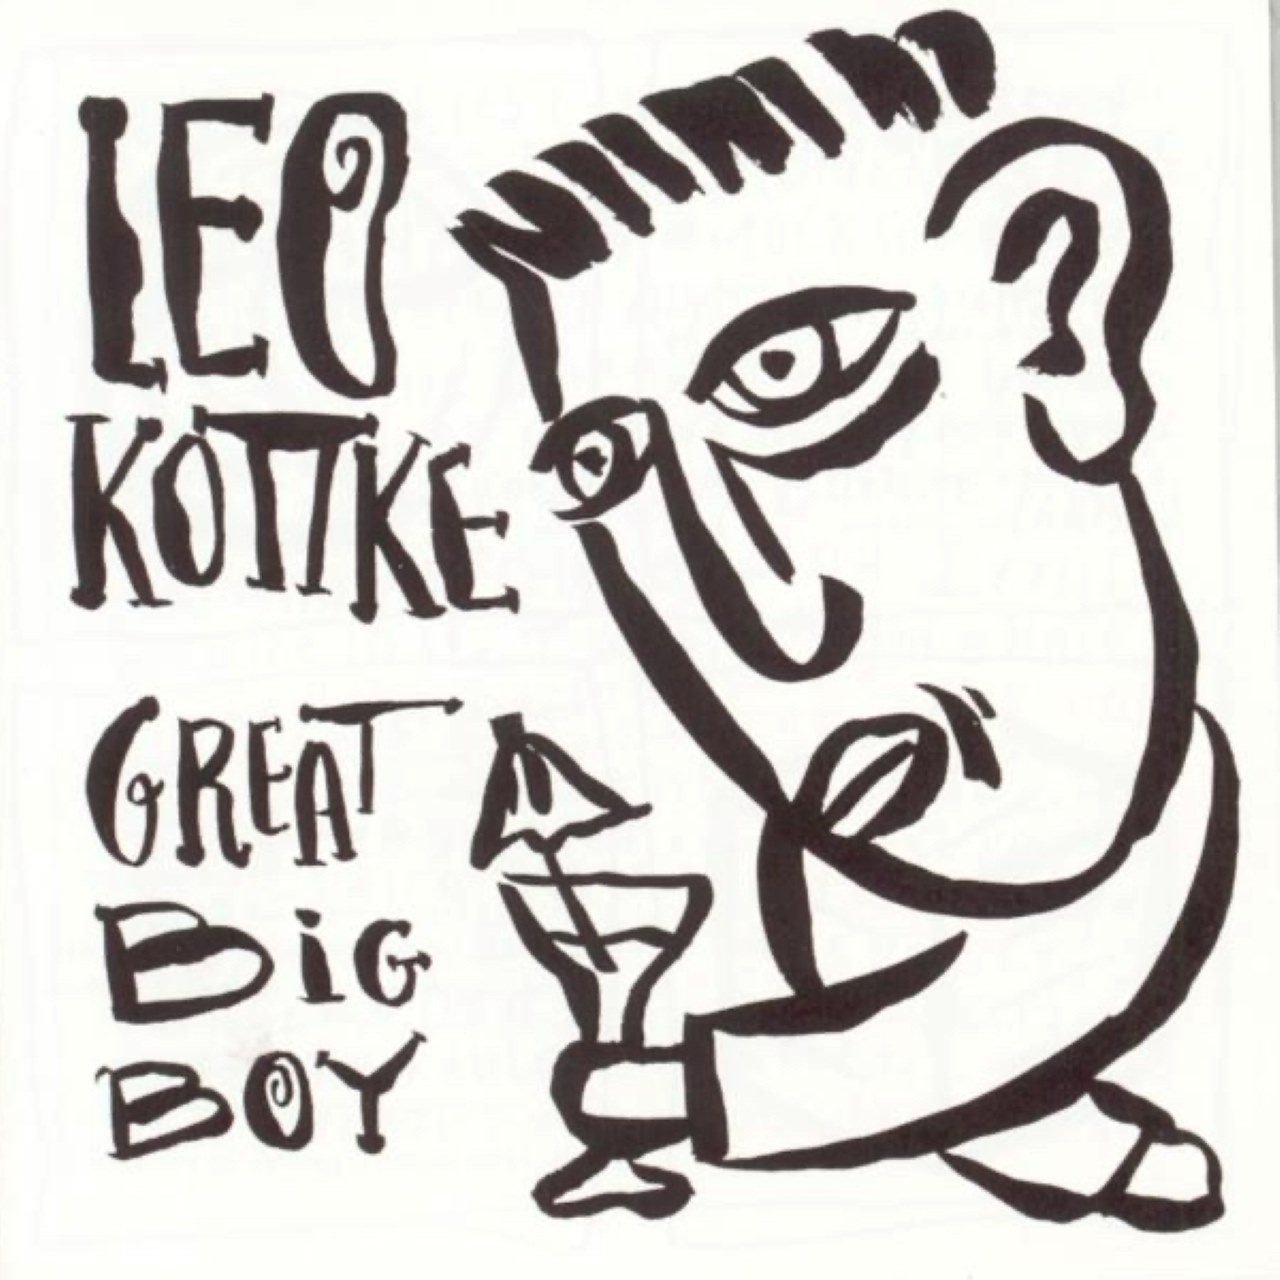 Leo Kottke – Great Big Boy cover album